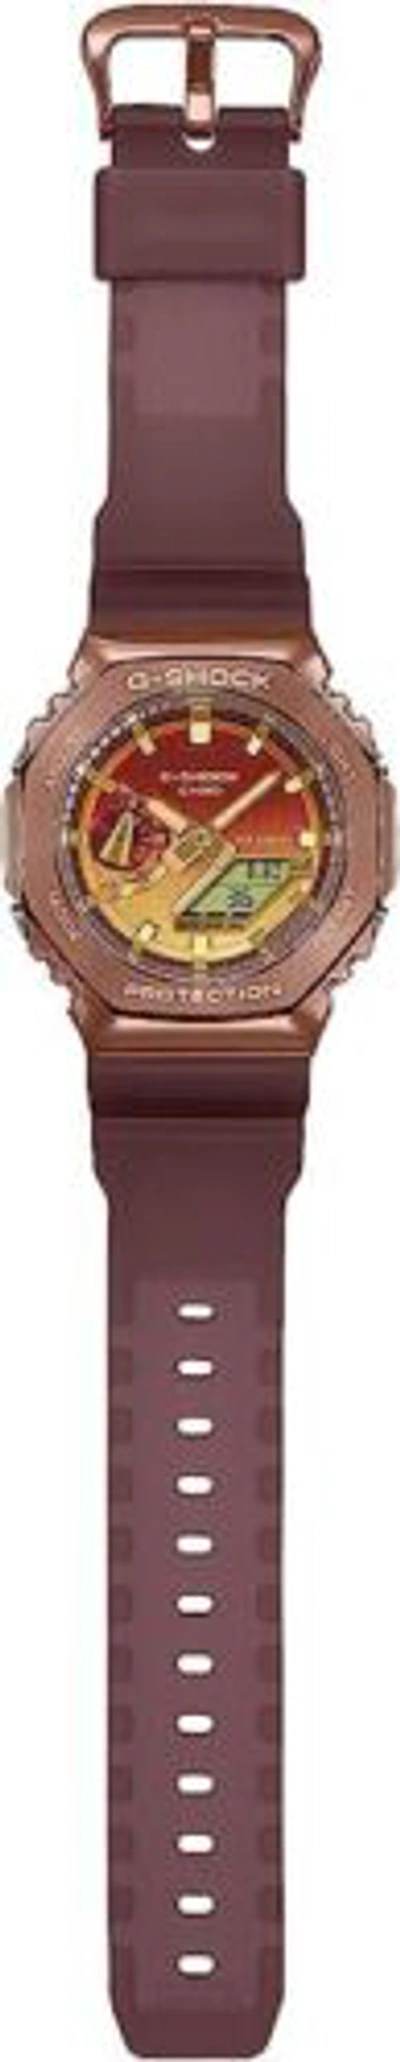 Pre-owned Casio G-shock Gm-2100cl-5ajf Limited Vintage Color Analog Digital Watch Men